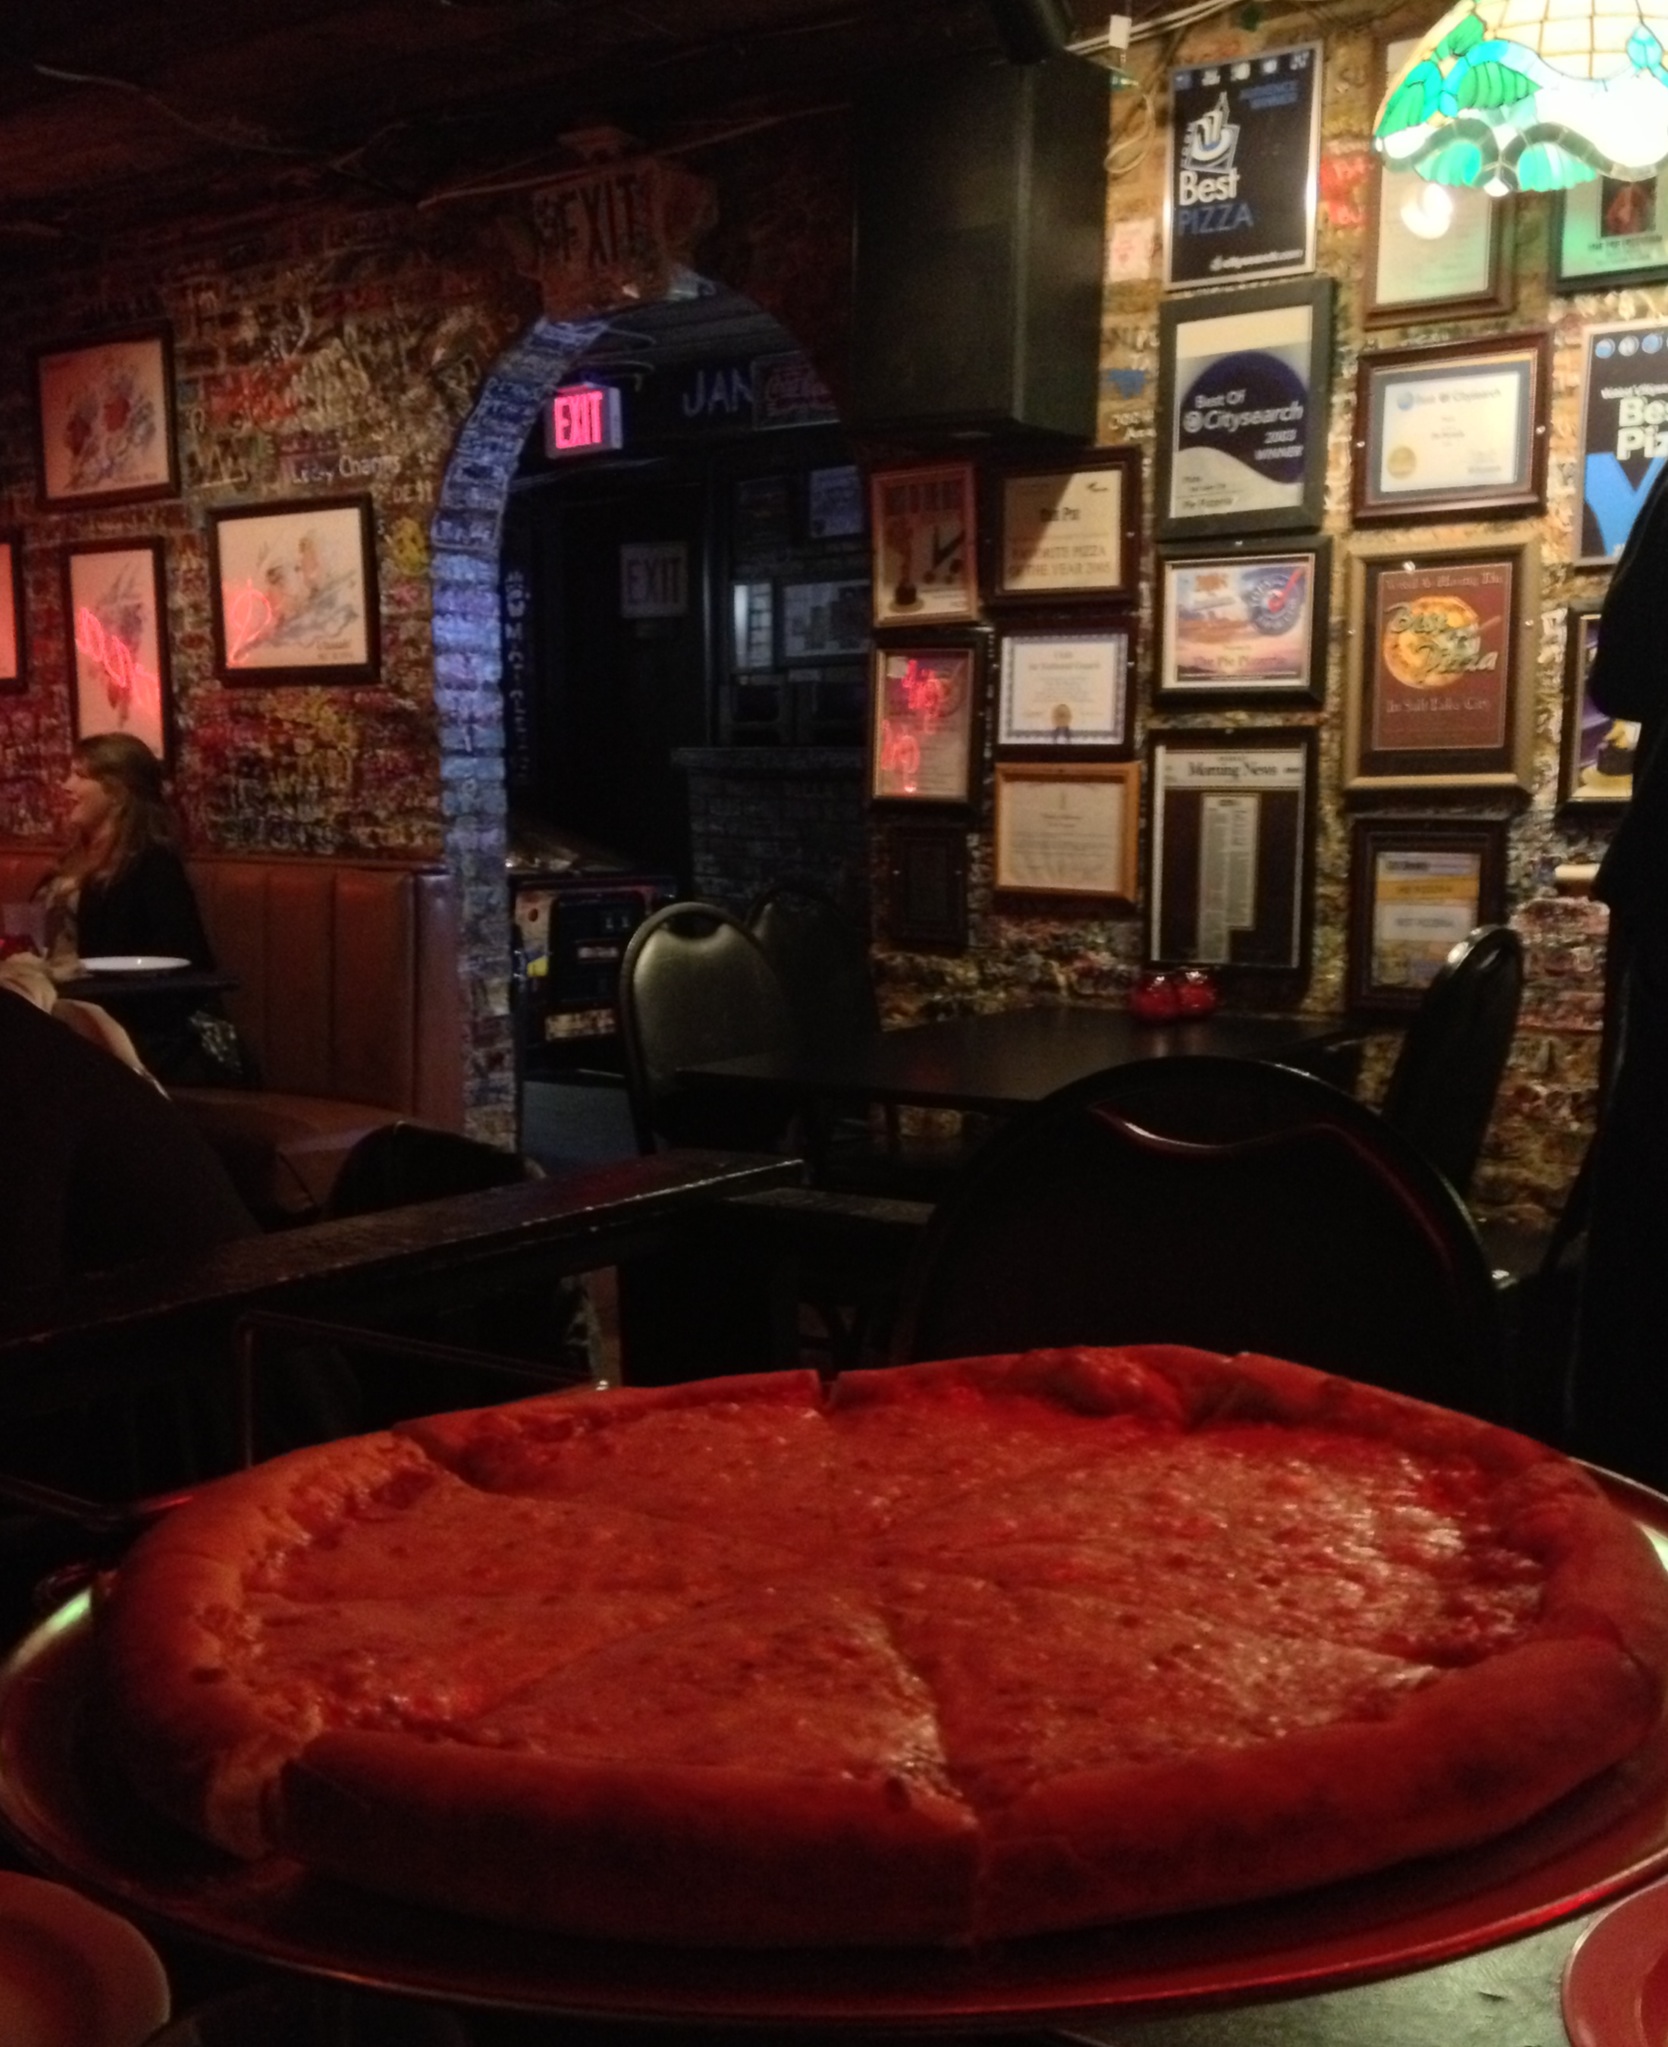 Wordless Wednesday: The Pie Pizzeria